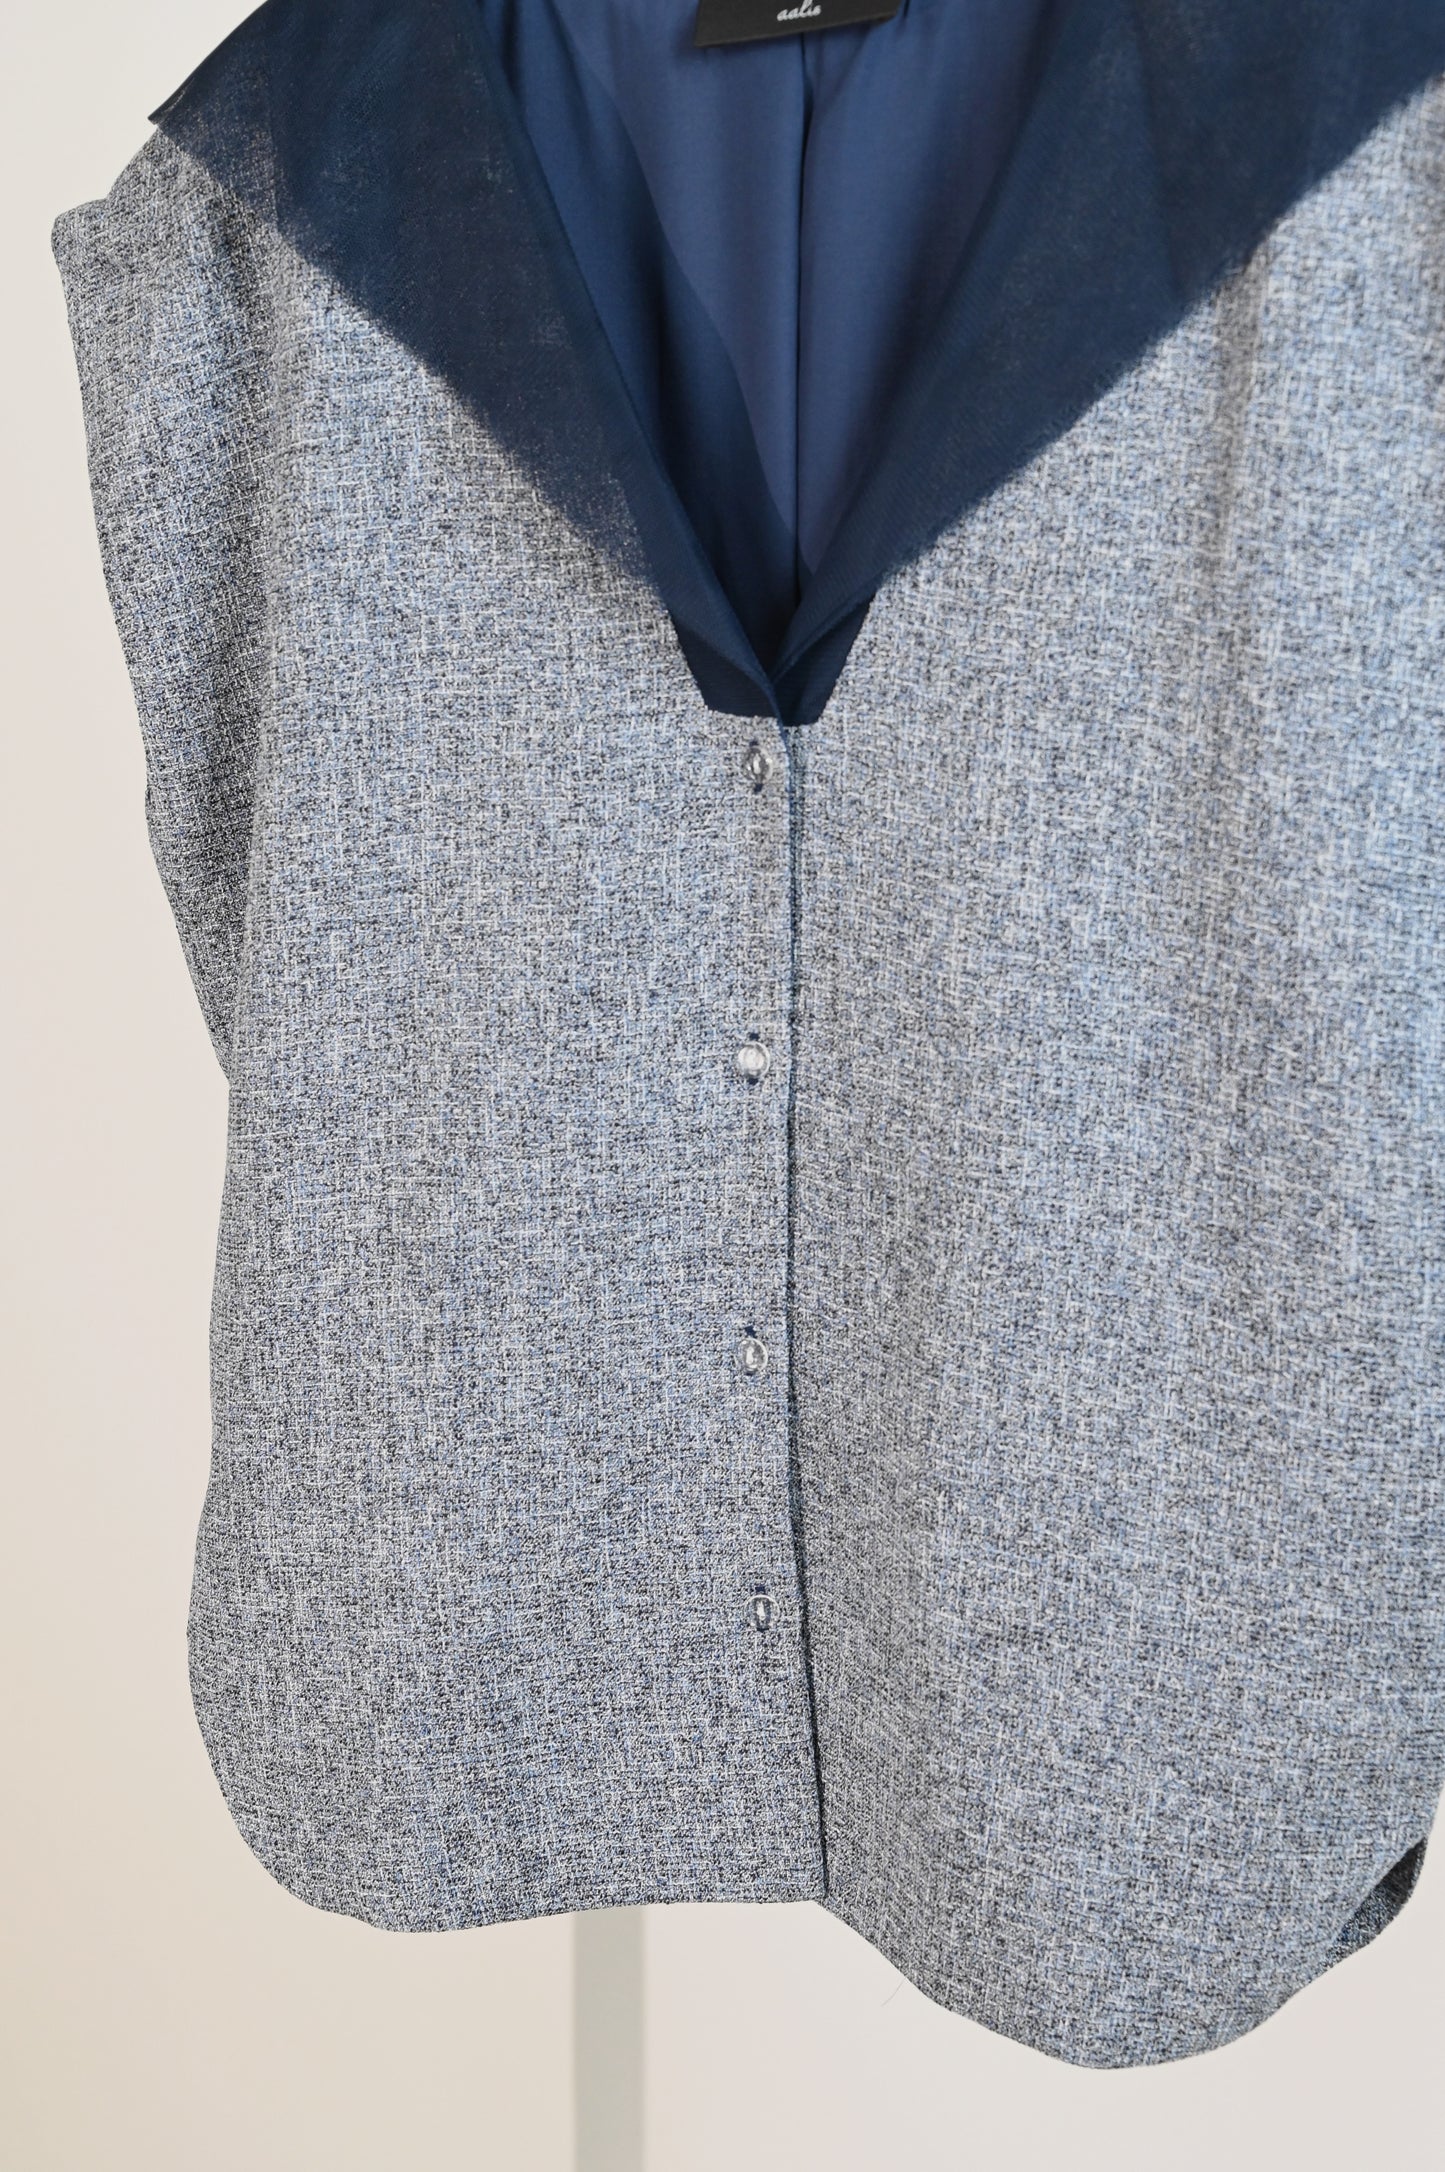 aalis WENDY tweed sleeveless pullover with mesh collar (Navy)